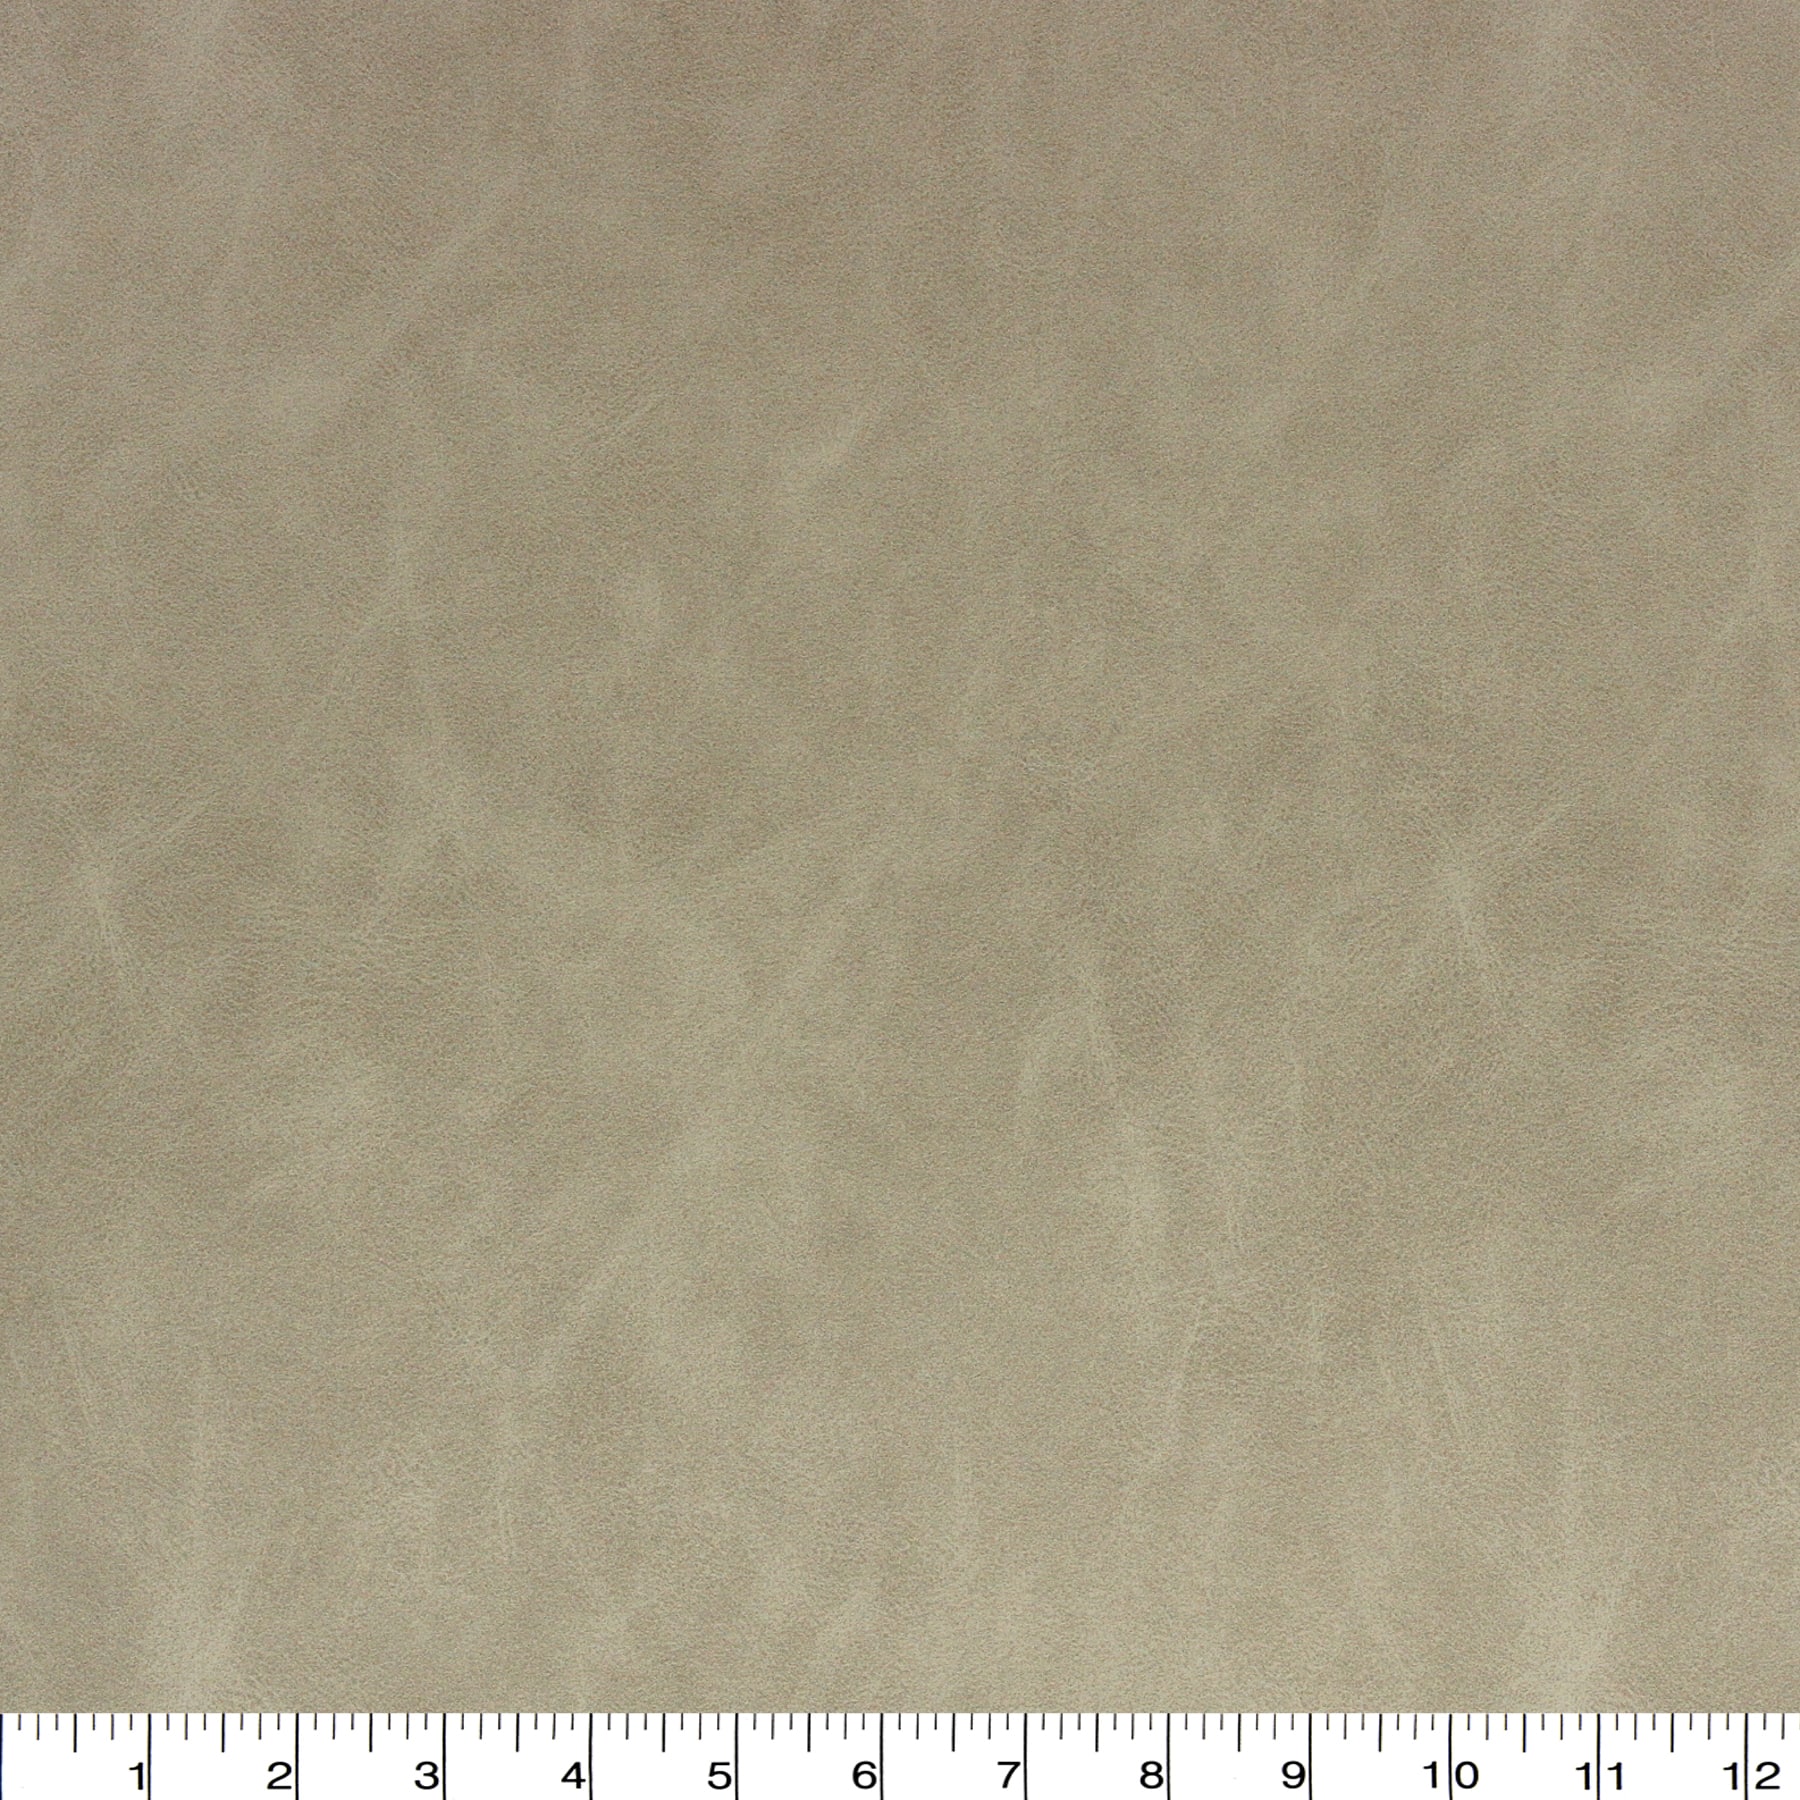 Richloom Stout Stone Vinyl Upholstery Fabric